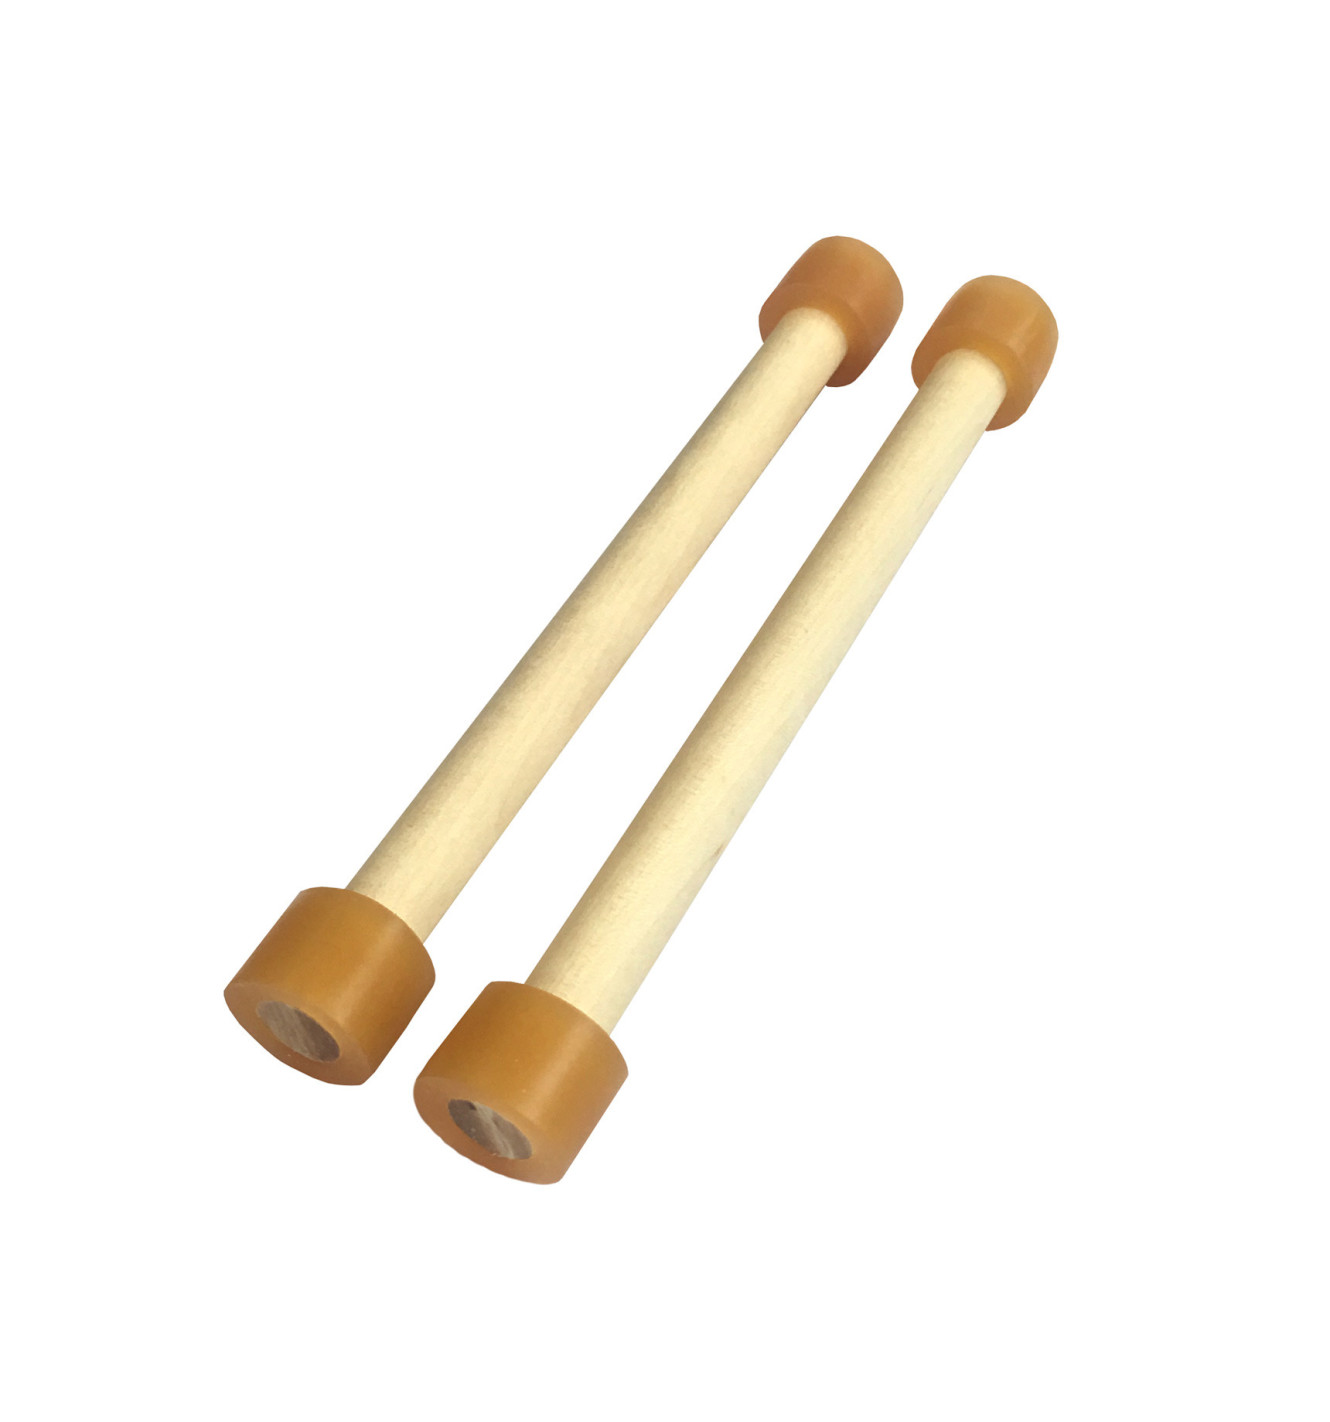 Pair of double drumsticks for Spacedrum - Wooden model 16 cm - Handpan